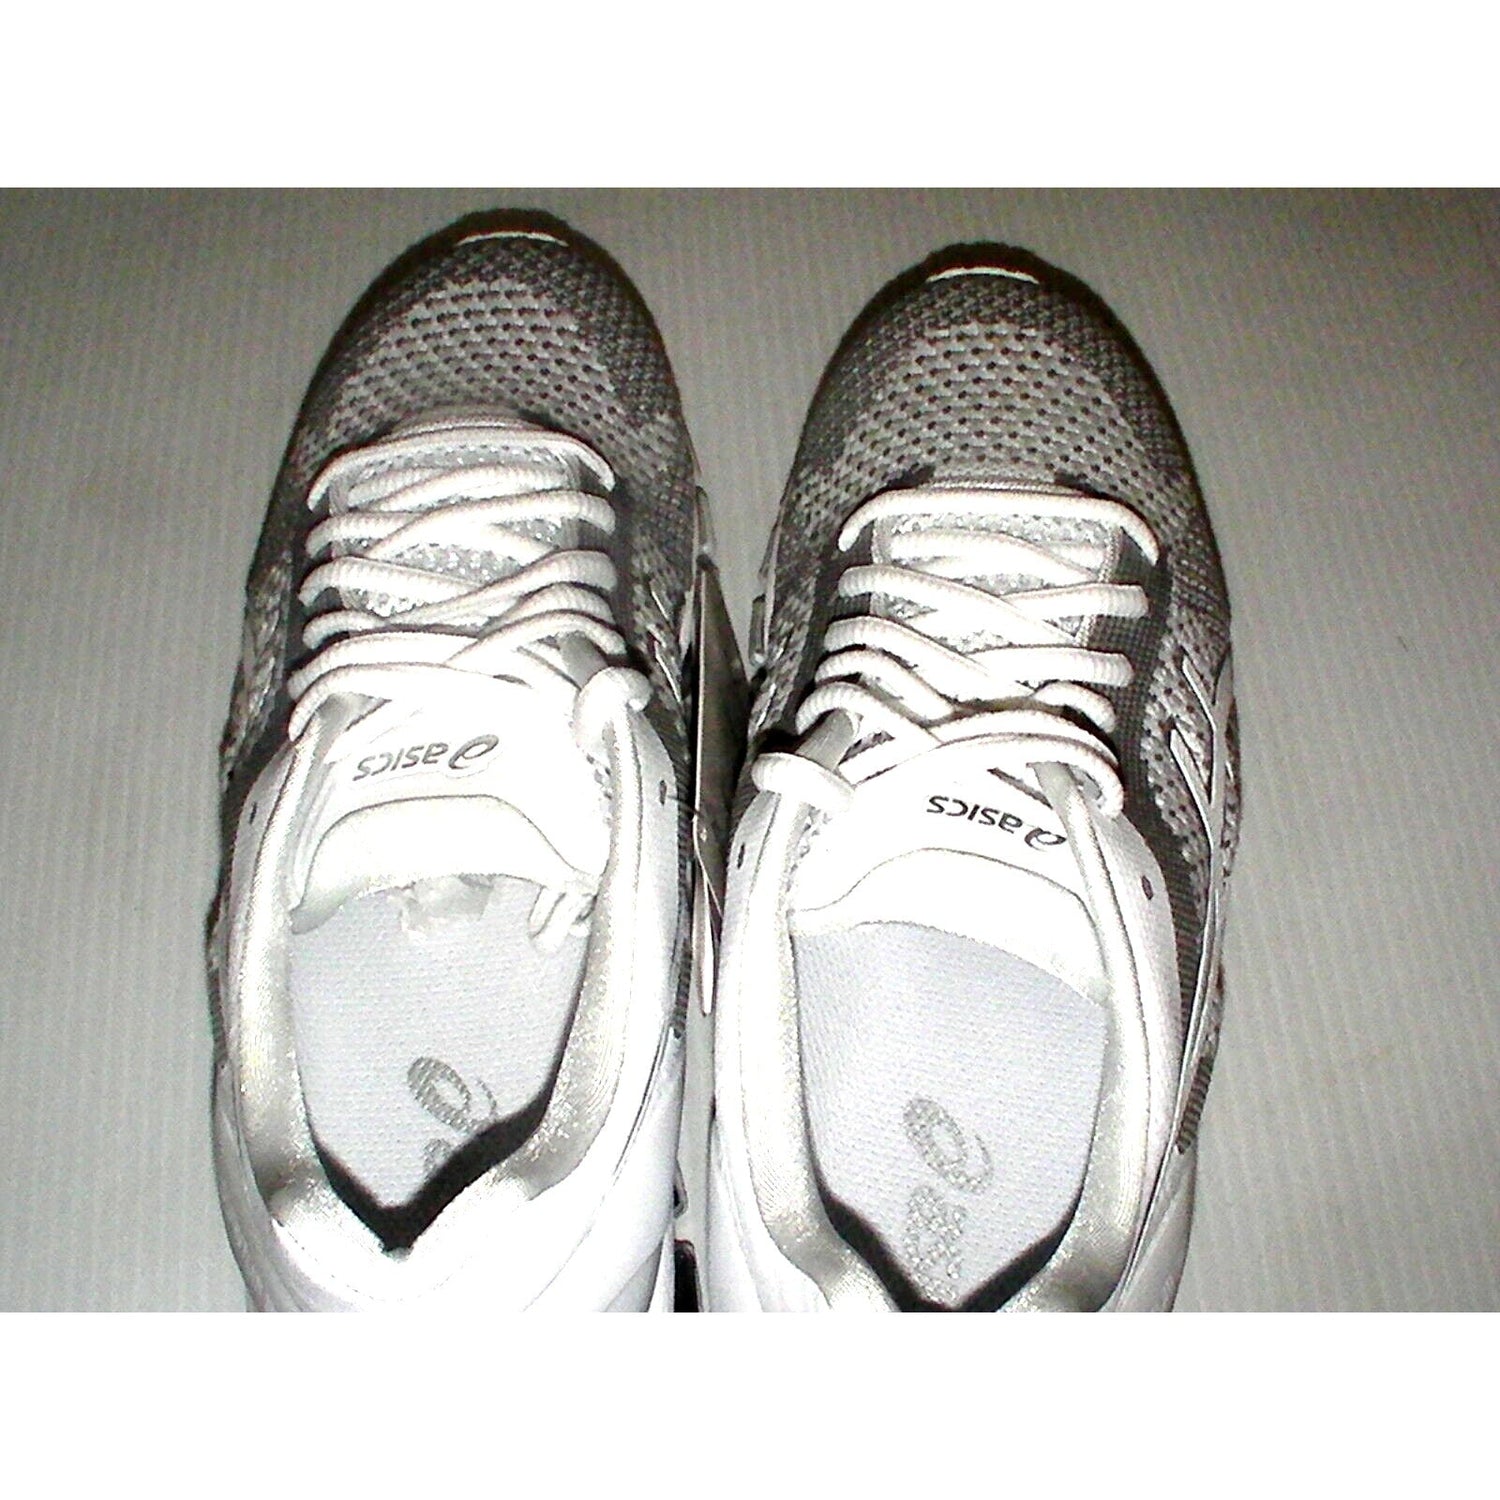 Asics women's running shoes gel quantum 360 knit white snow silver size 9 us - Classic Fashion Deals